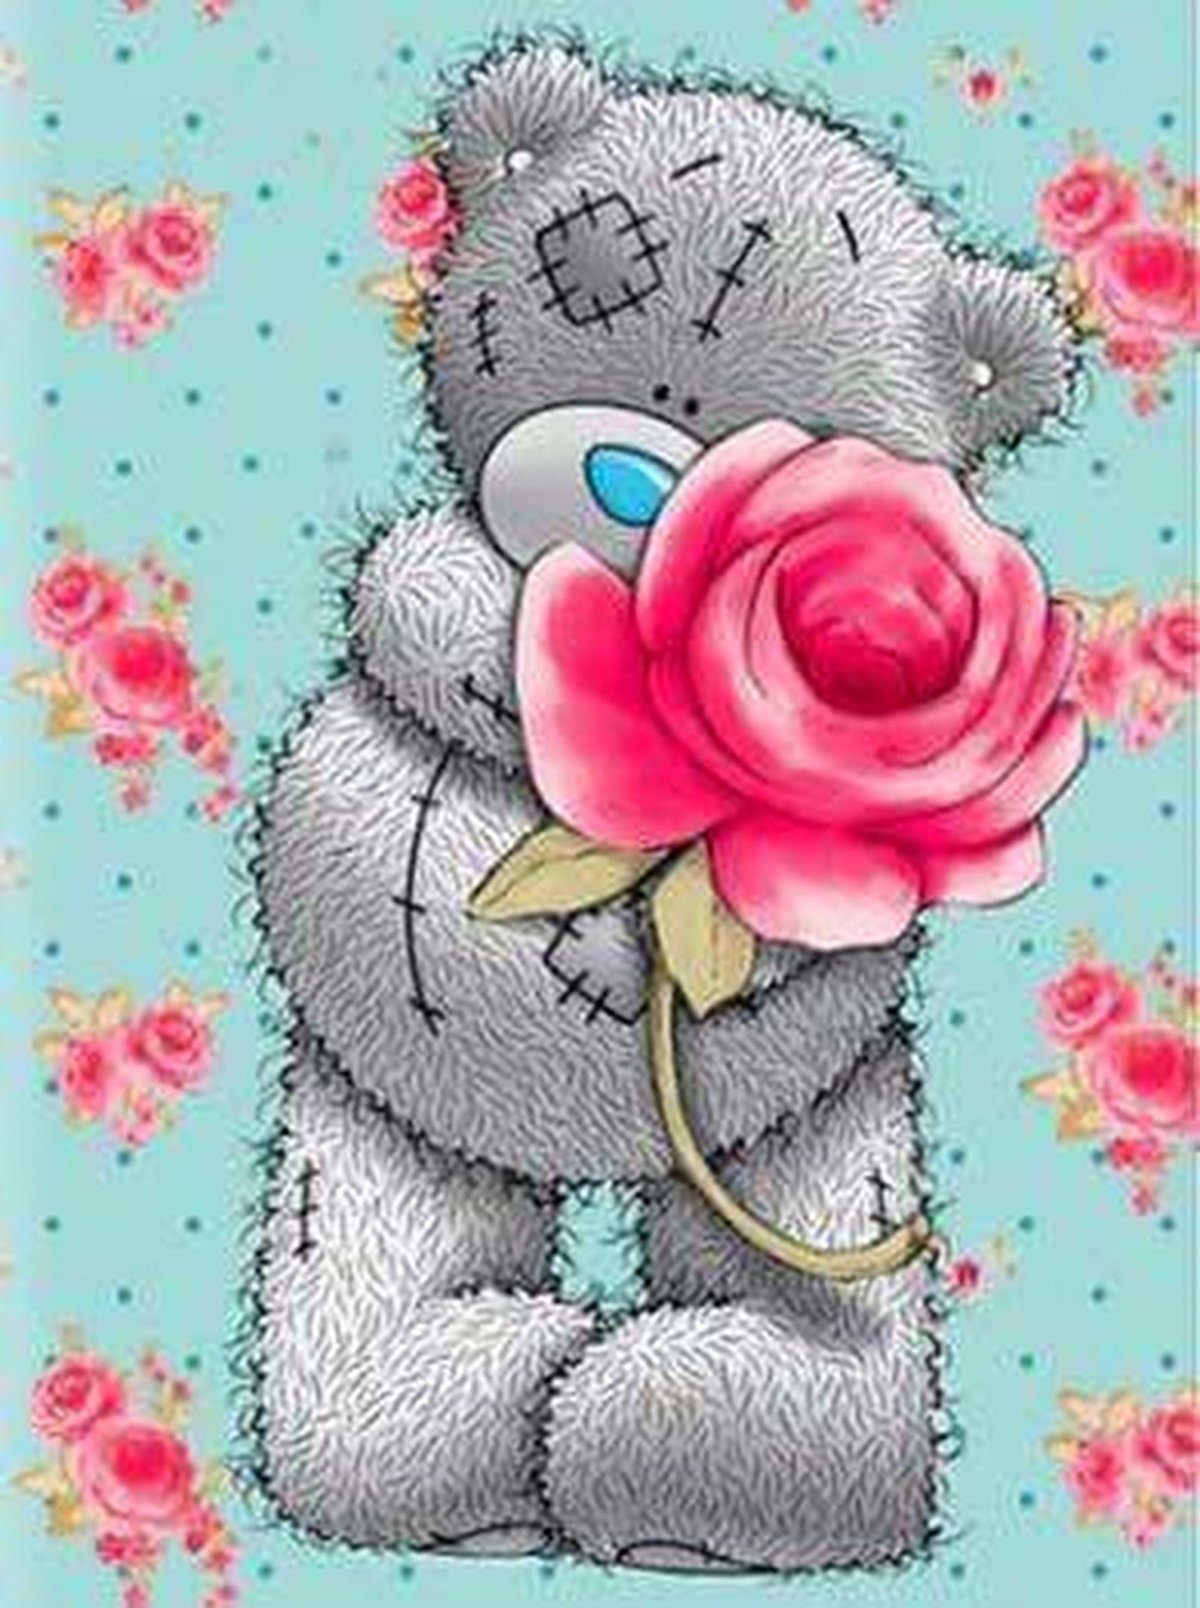 Поздравления тедди. Медвежонок Тедди с цветами. Мишка Тедди с цветочком. С днём рождения мишка Тедди. Открытки с мишками.